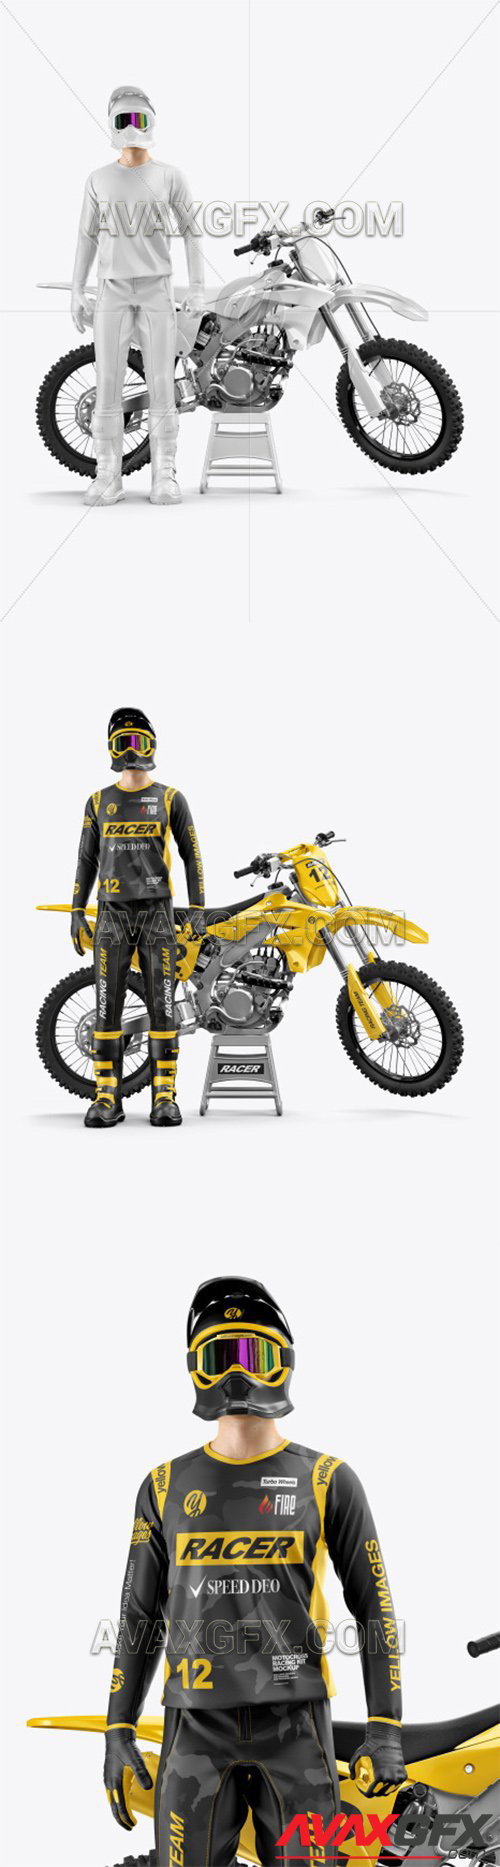 Motocross Racing Kit Mockup 57121